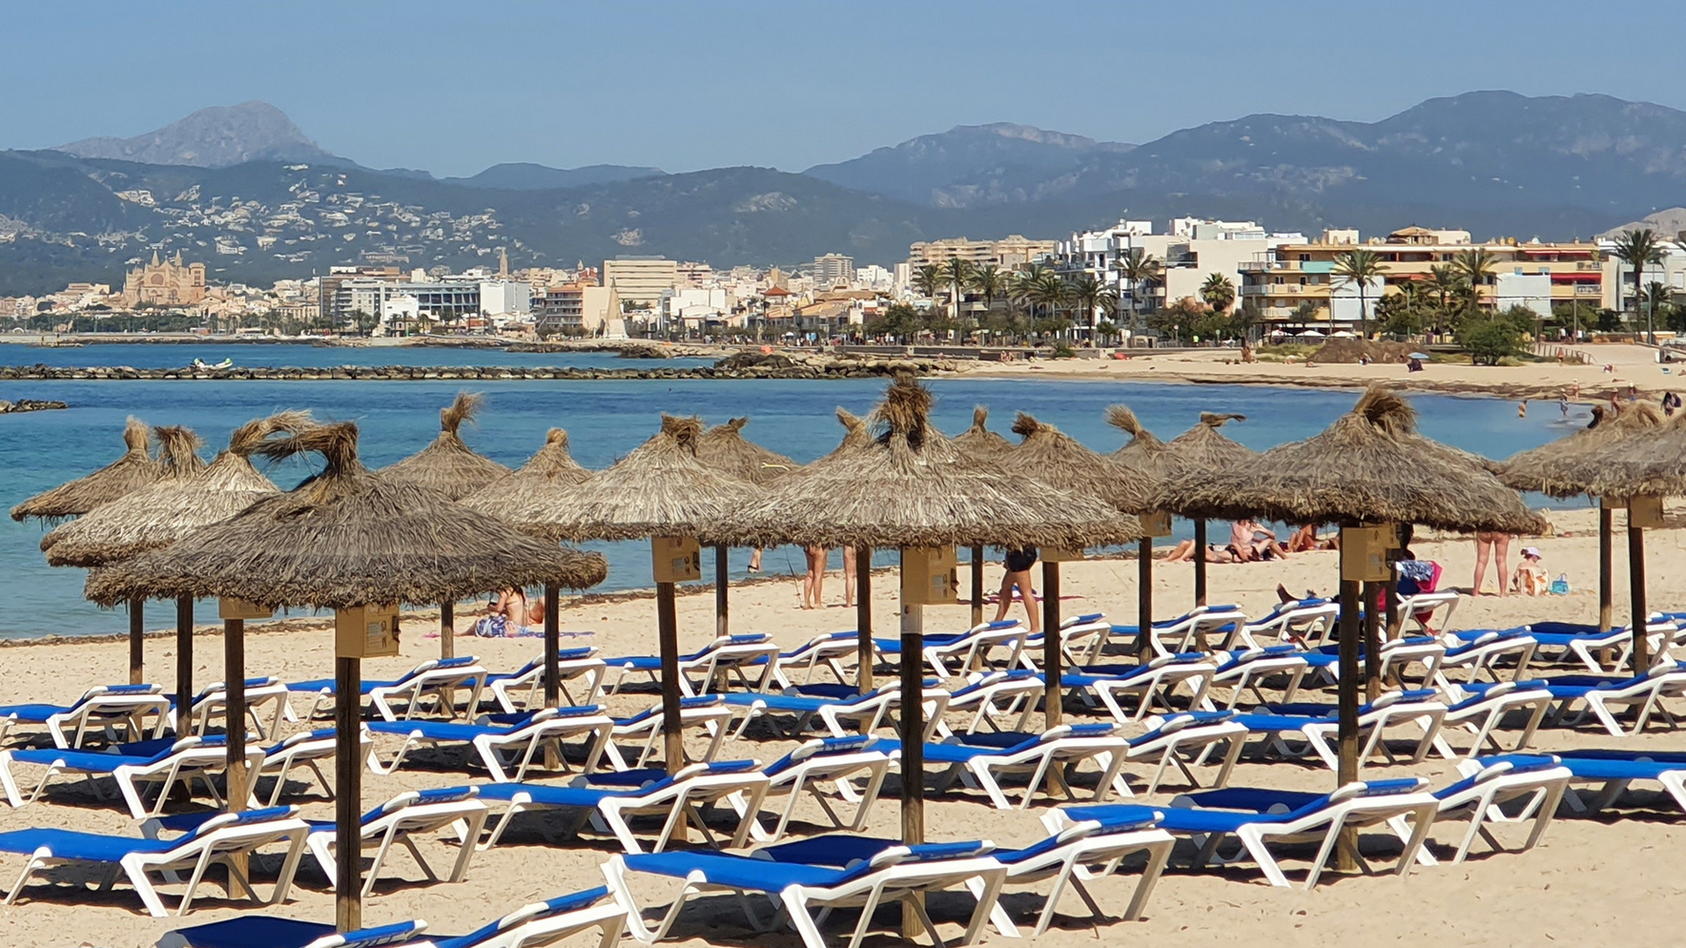 Sieht die Playa de Palma am 16. Juli so aus?